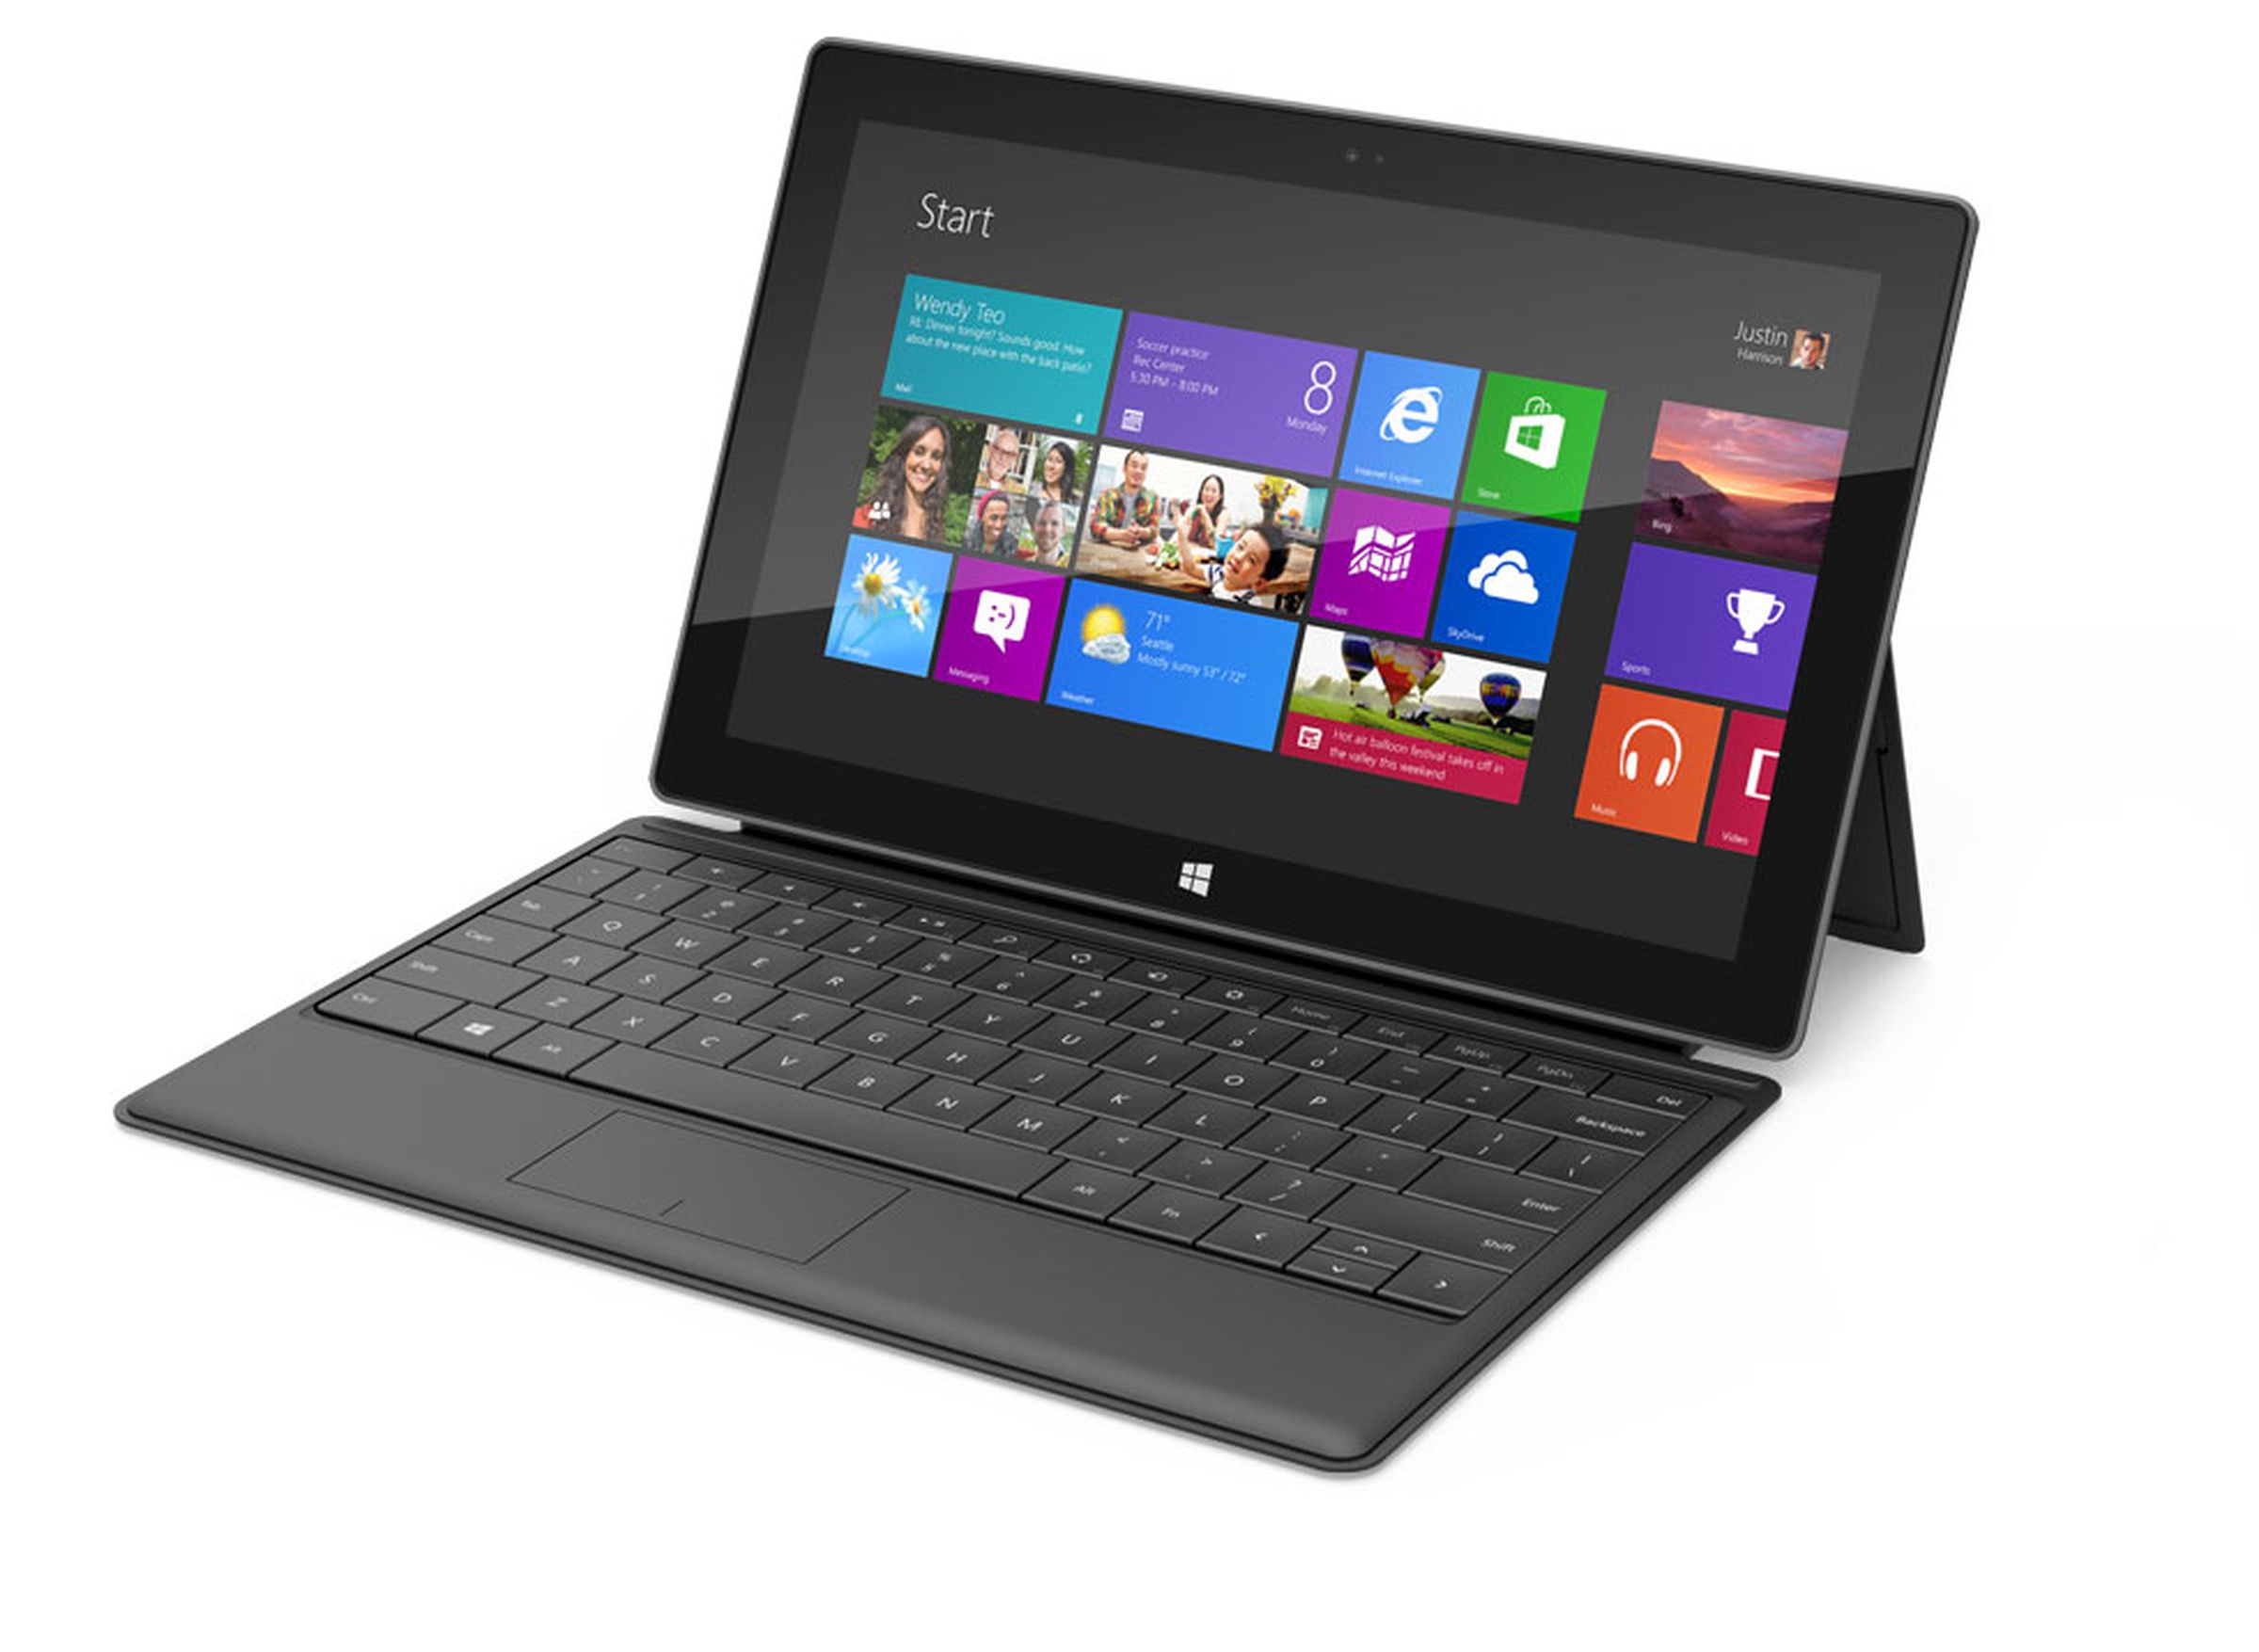 Microsoft Surface tablet press photos